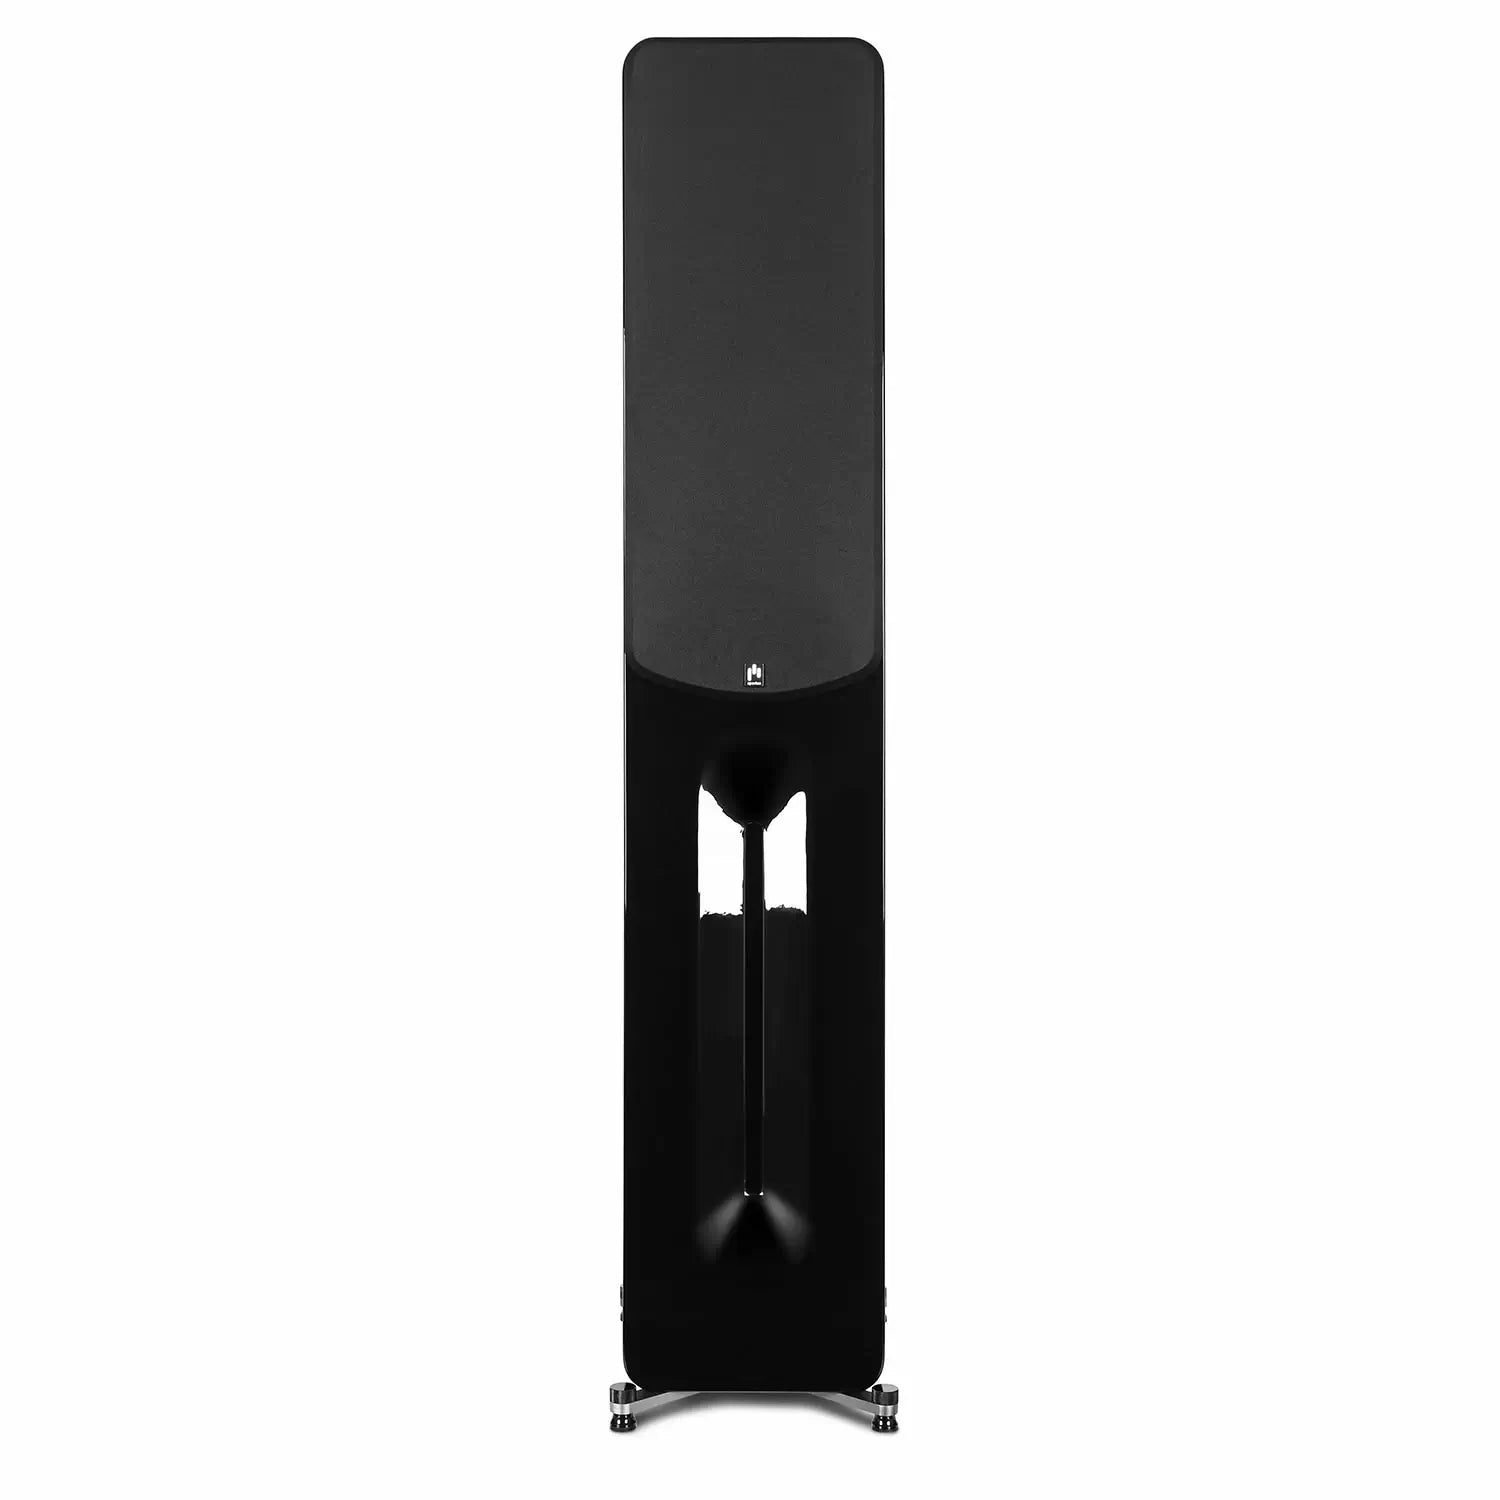 Aperion-Novus-N6T-Dual-6.5"-2-Way-Floorstanding-Tower-Speaker-GlossBlack-Front-Grille-On-aperionaudio